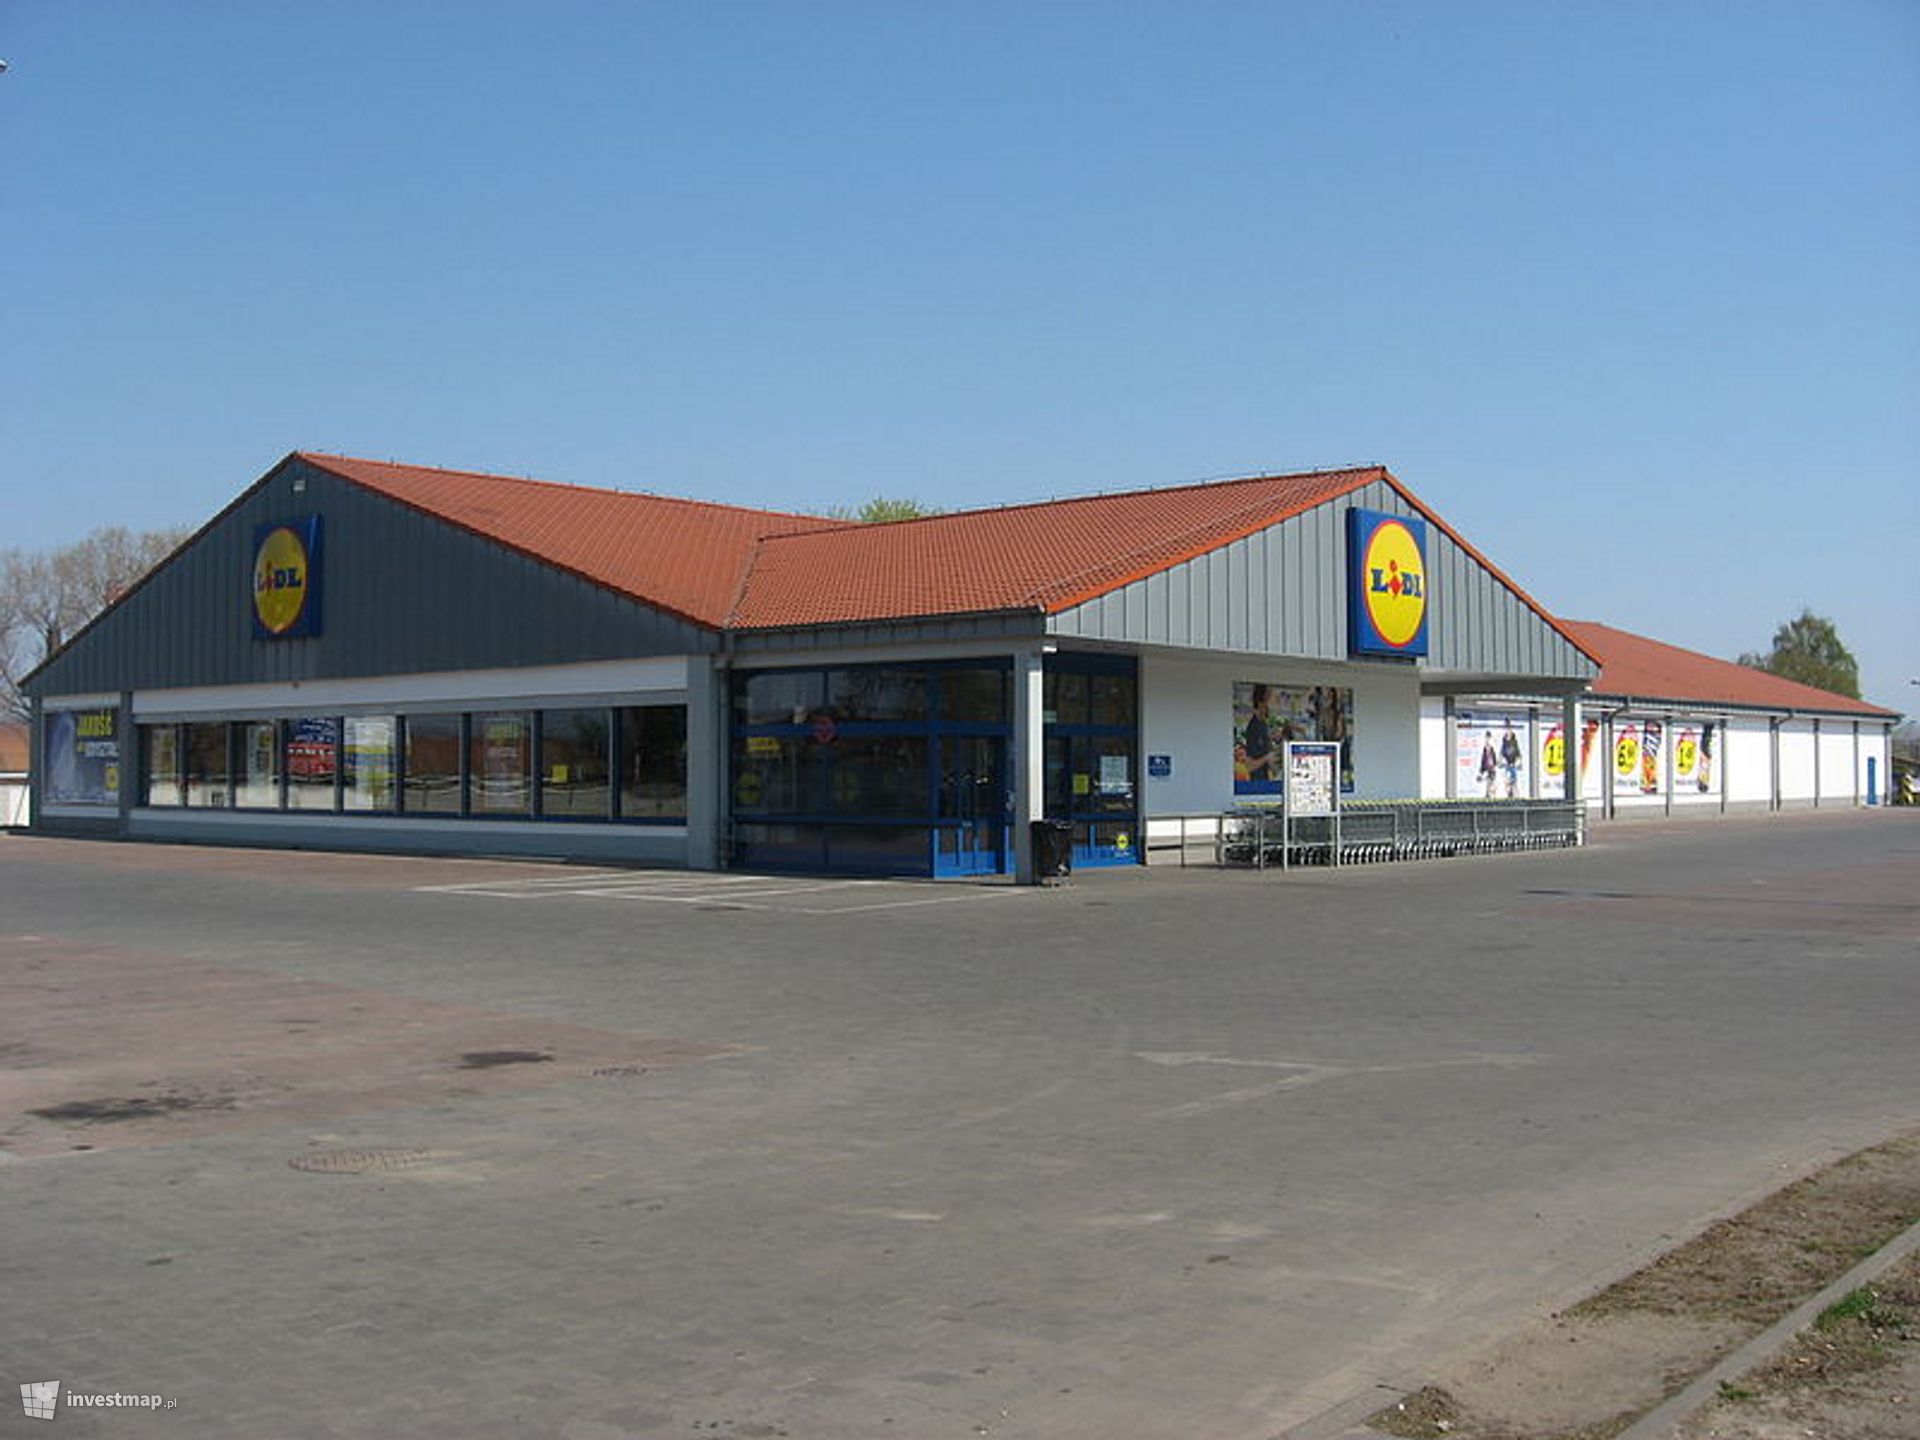 [Gdynia] Supermarket "Lidl", ul. Chylońska